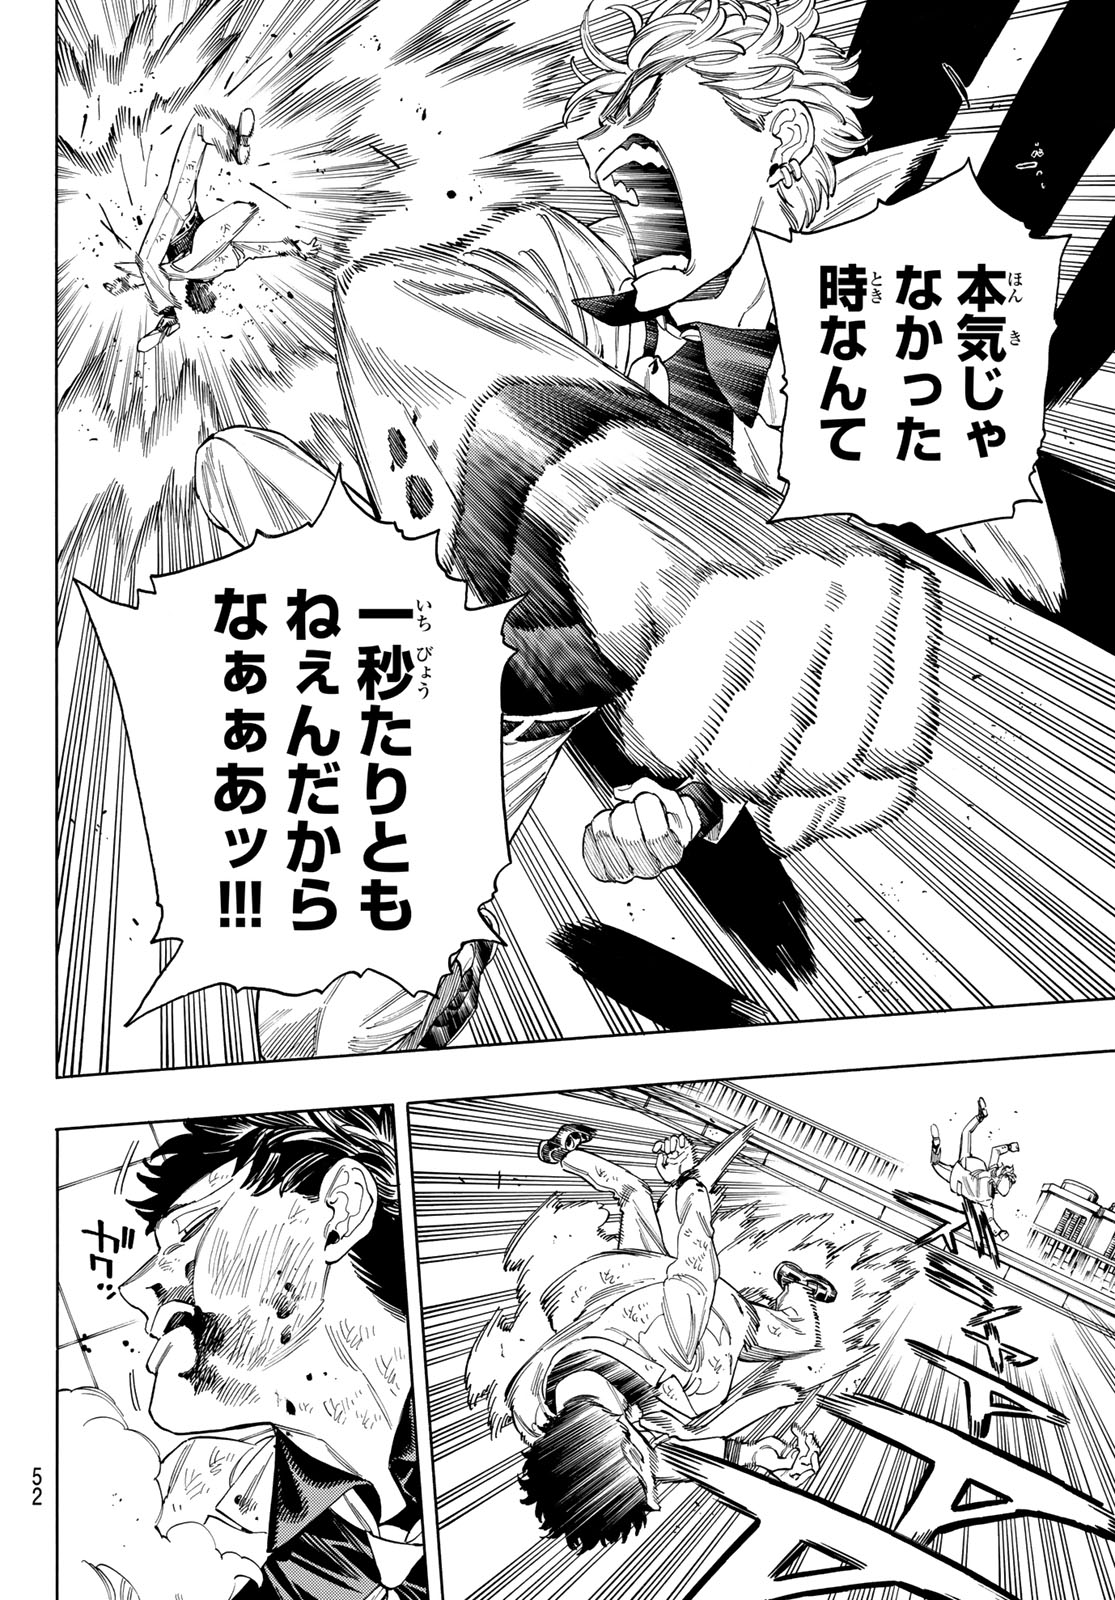 Akabane Honeko no Bodyguard - Chapter 79 - Page 6